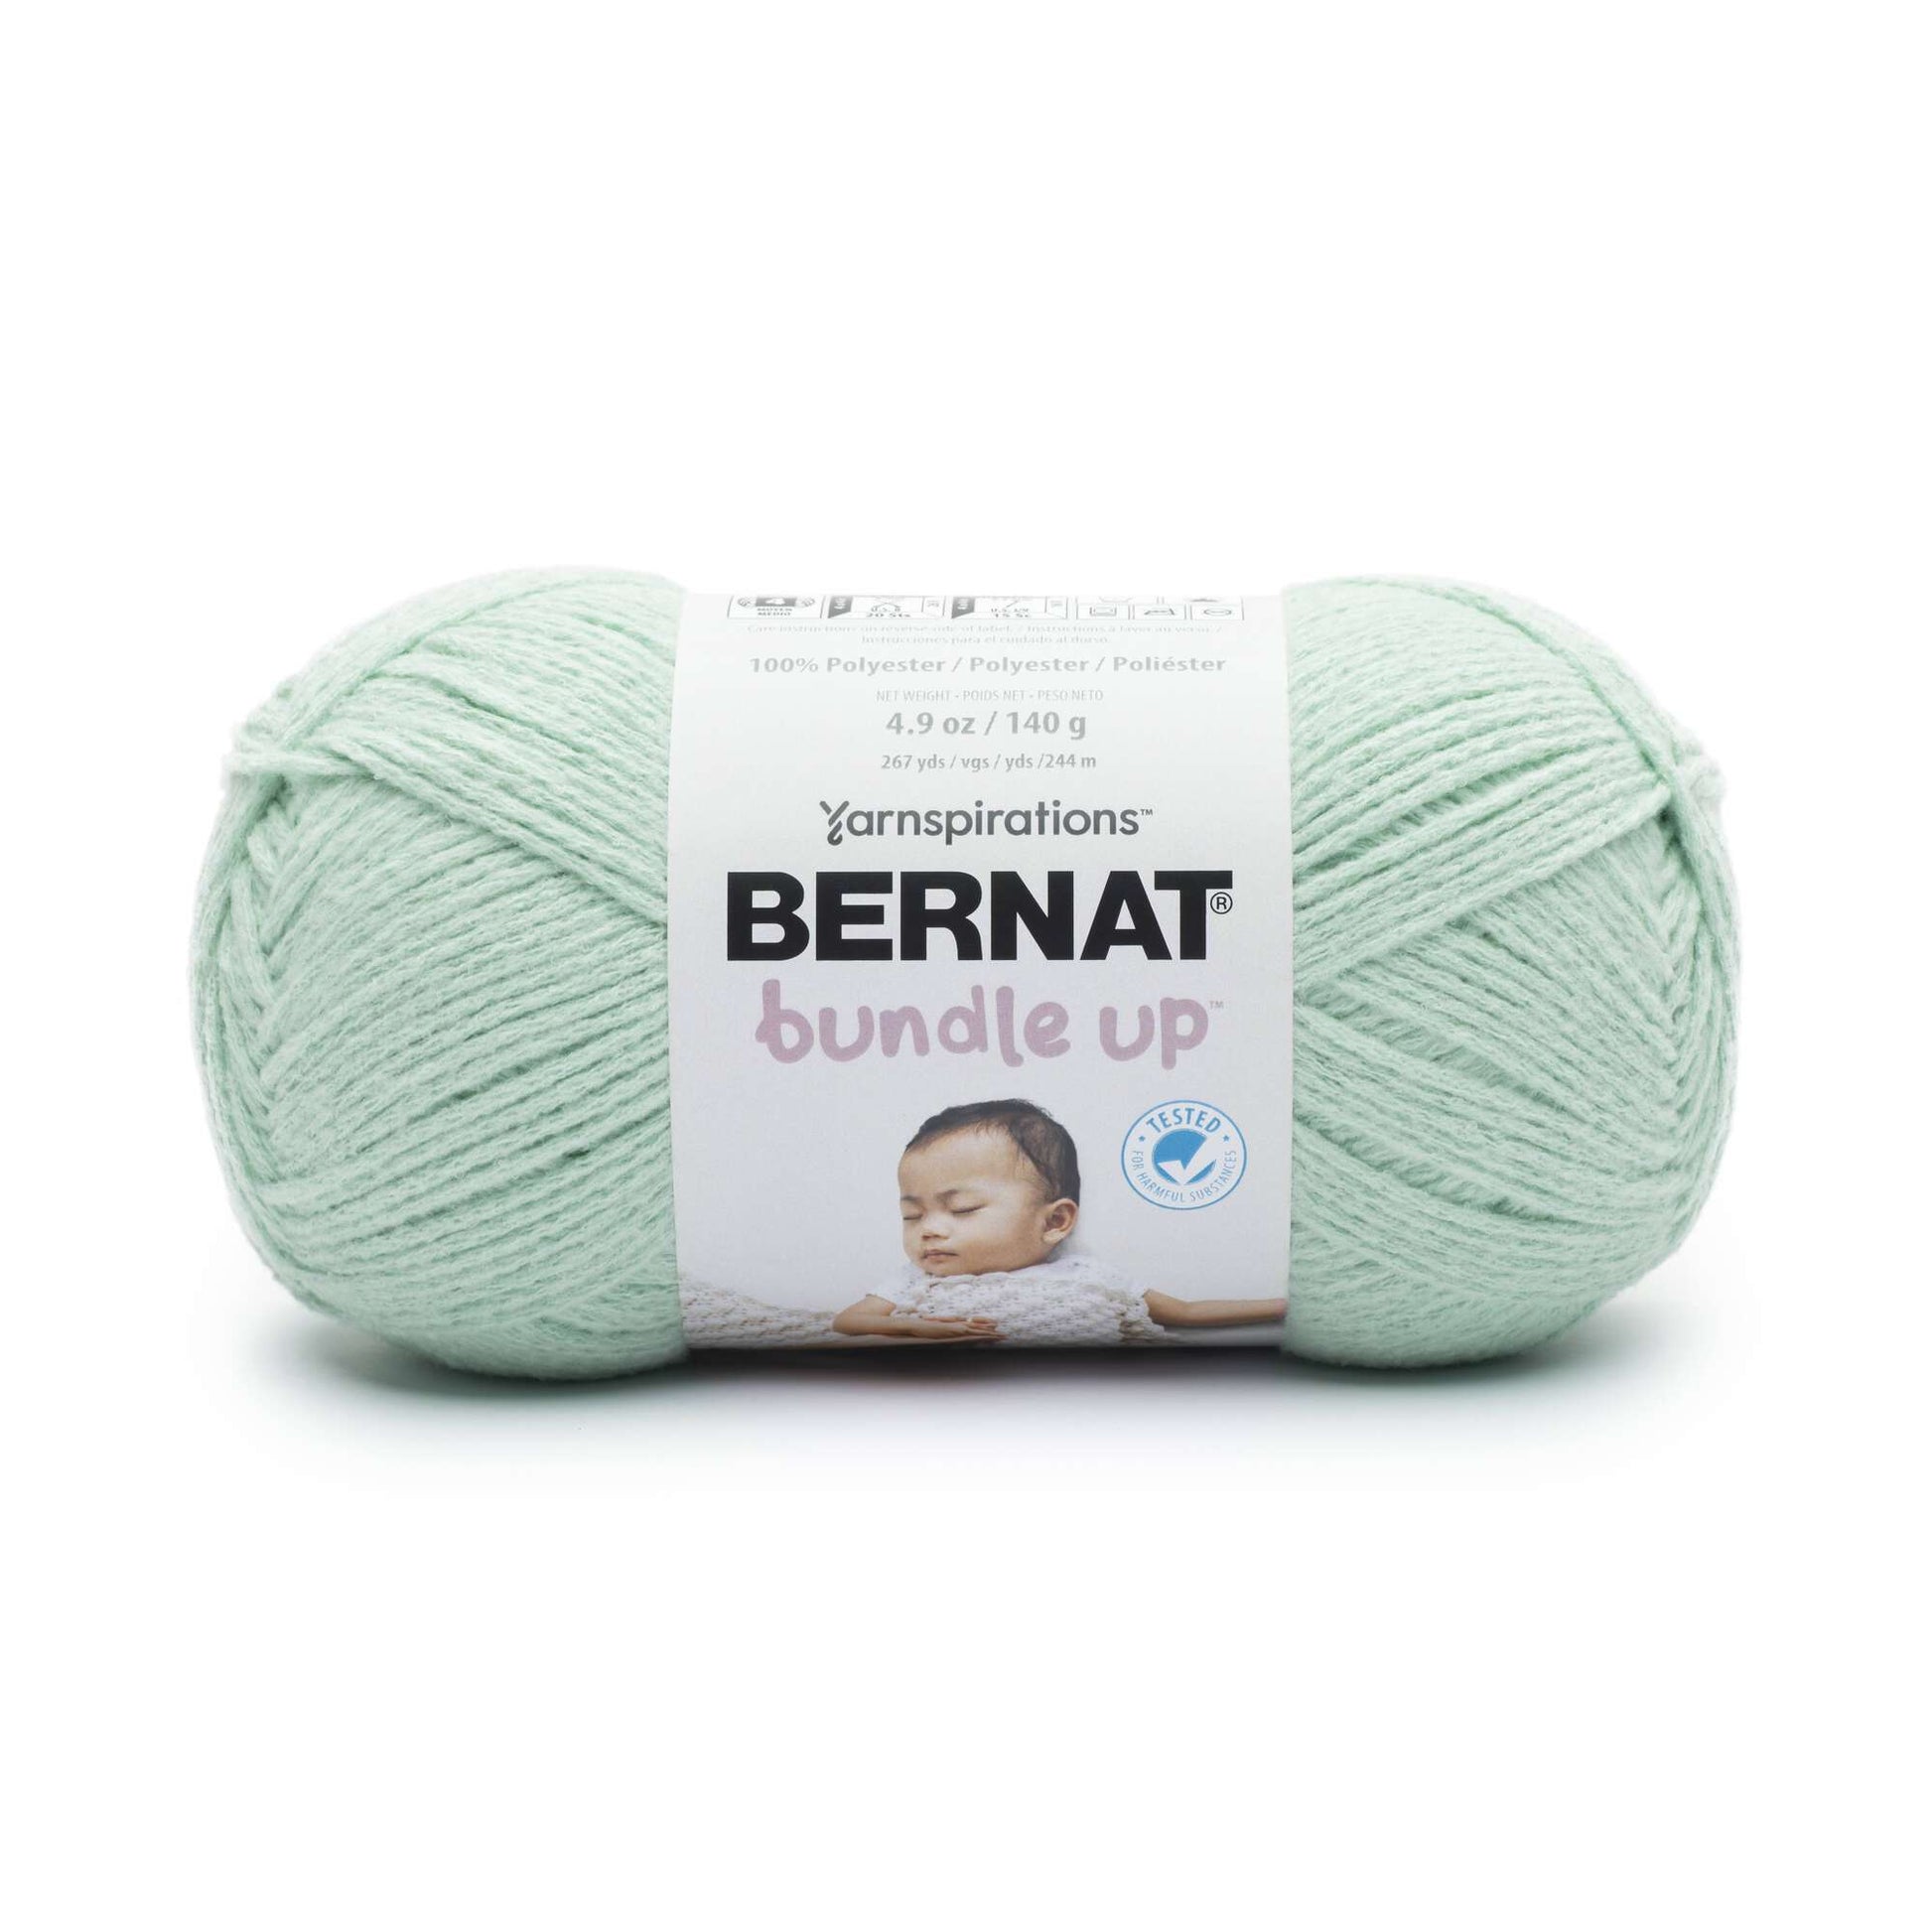  Bernat Softee Baby Yarn 3 Pack Bundle Includes 3 Patterns DK  Light Worsted #3